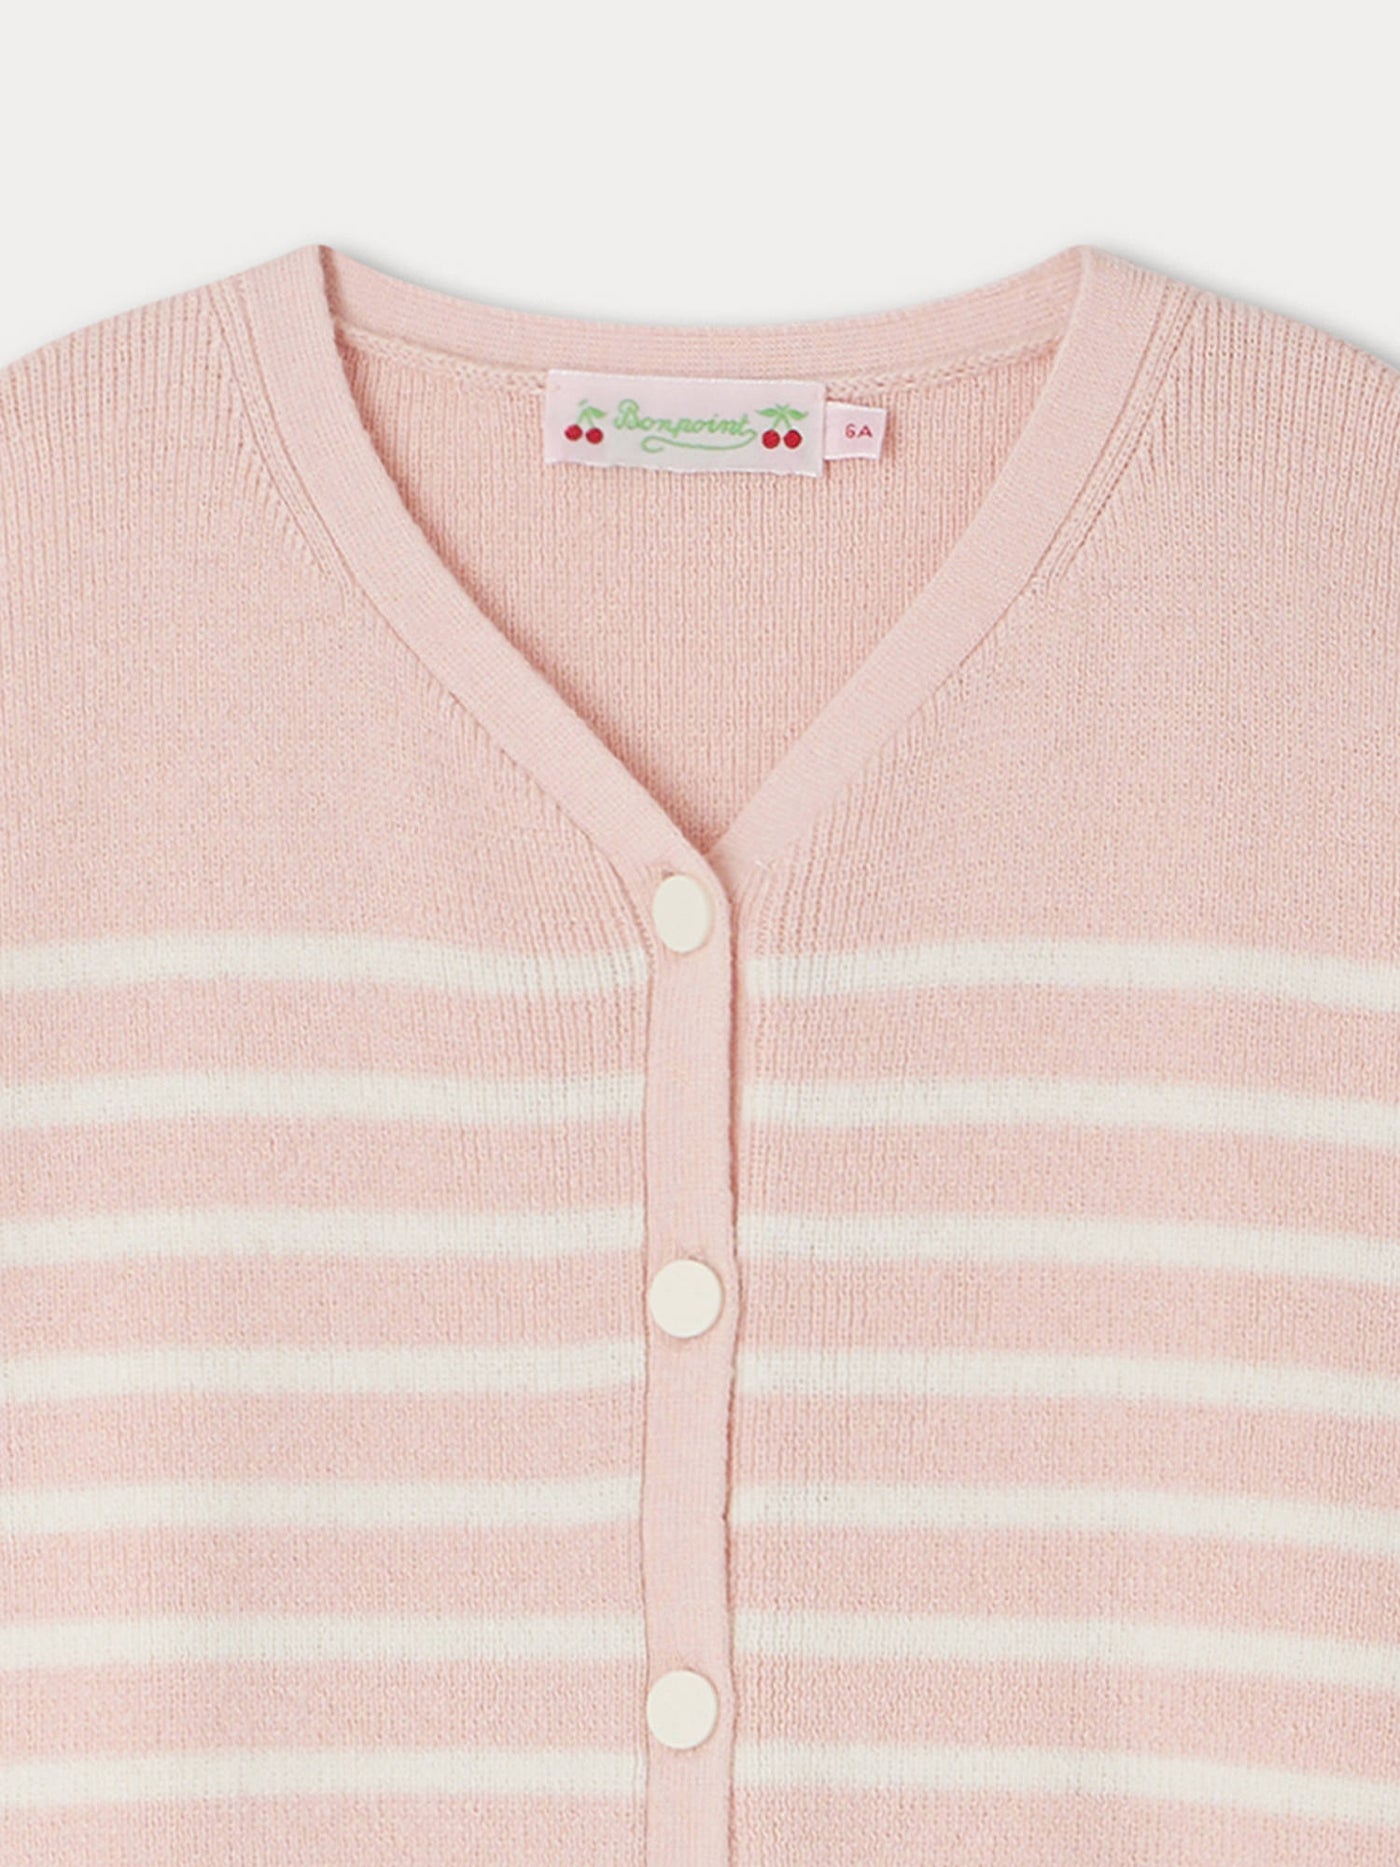 Demy Cardigan pink stripes